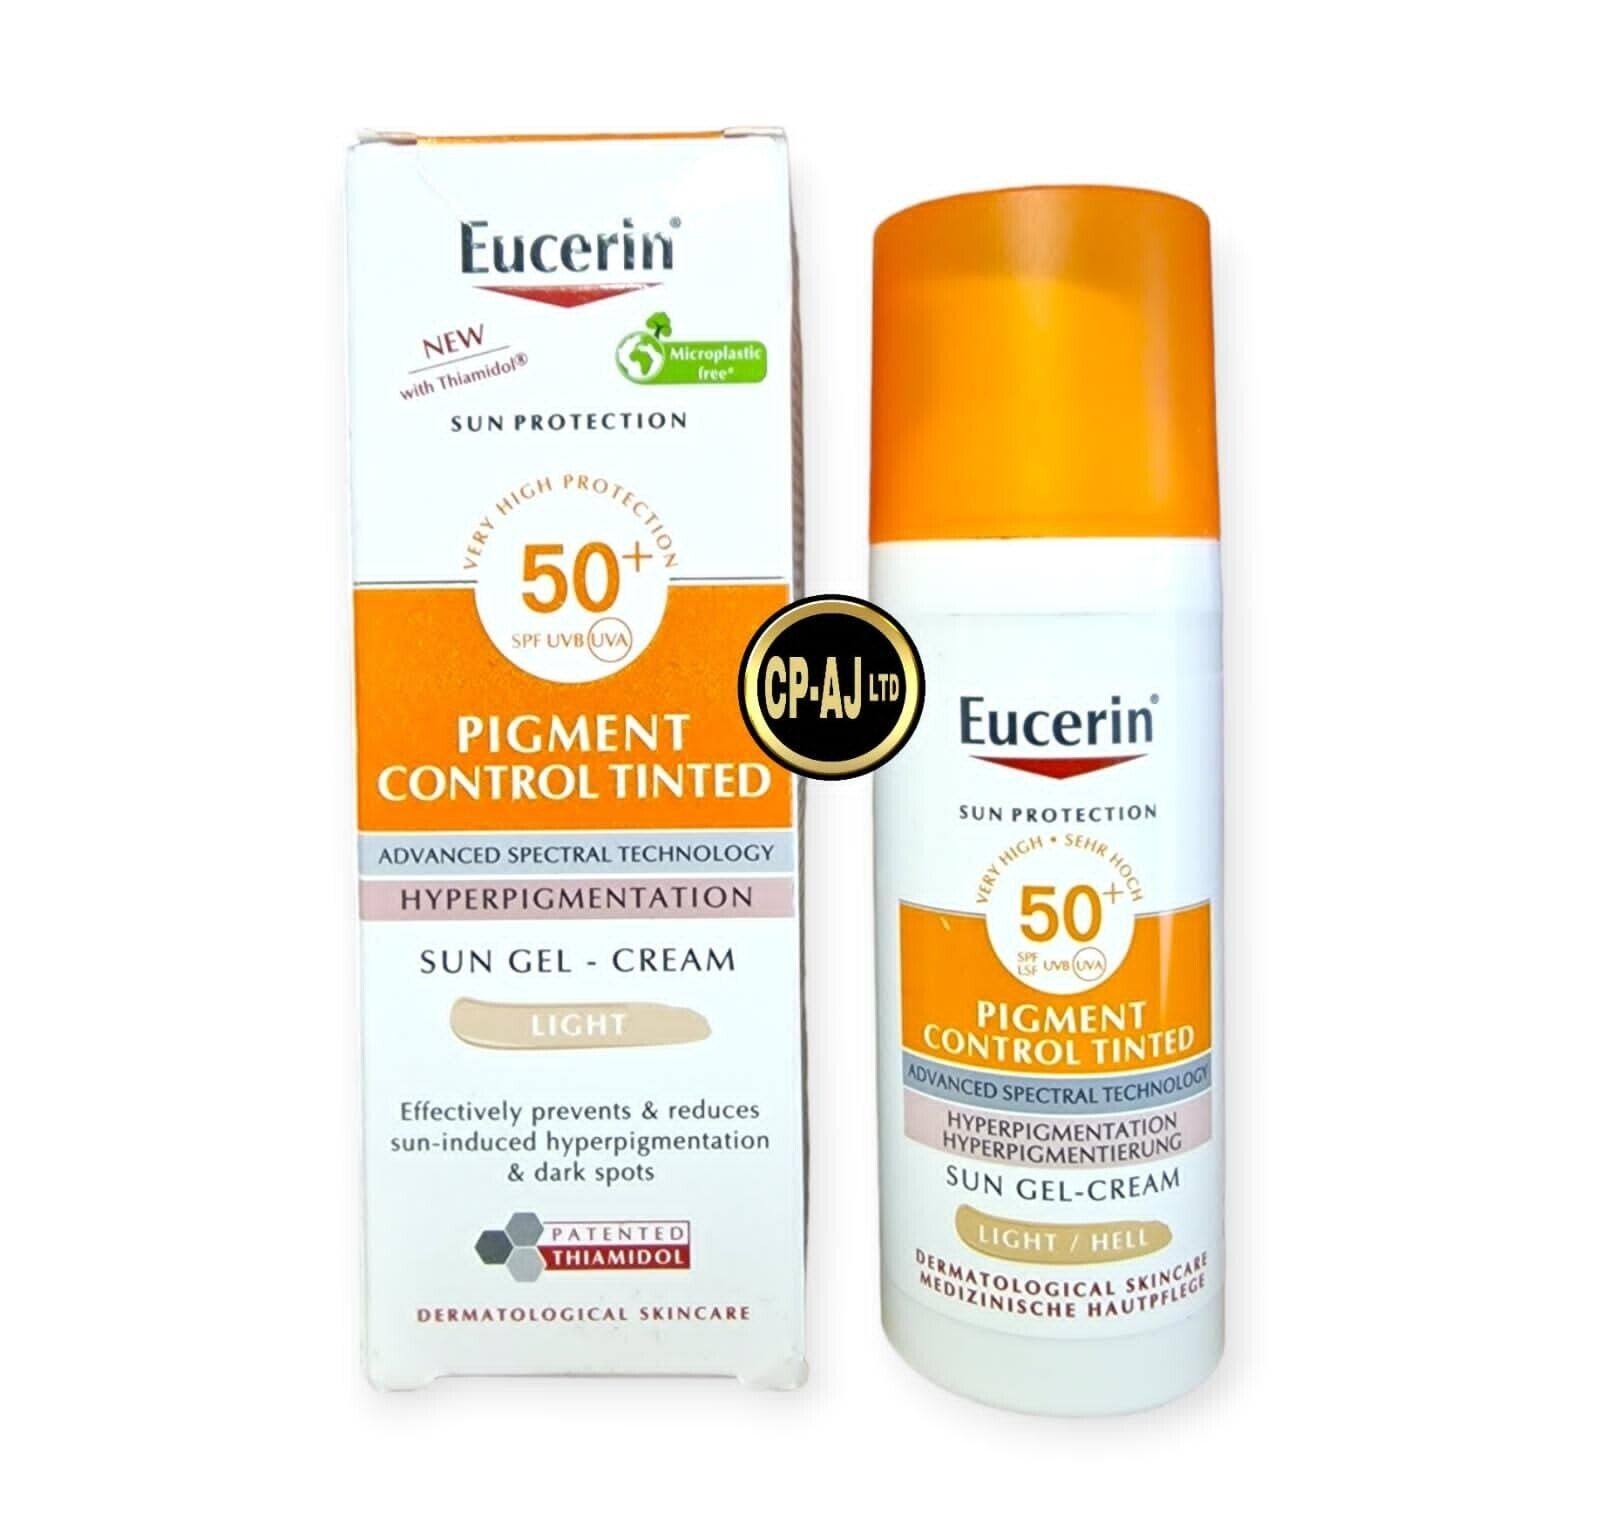 Eucerin Pigment Control Tinted Sun Gel - Cream Light SPF 50+ / 50ml